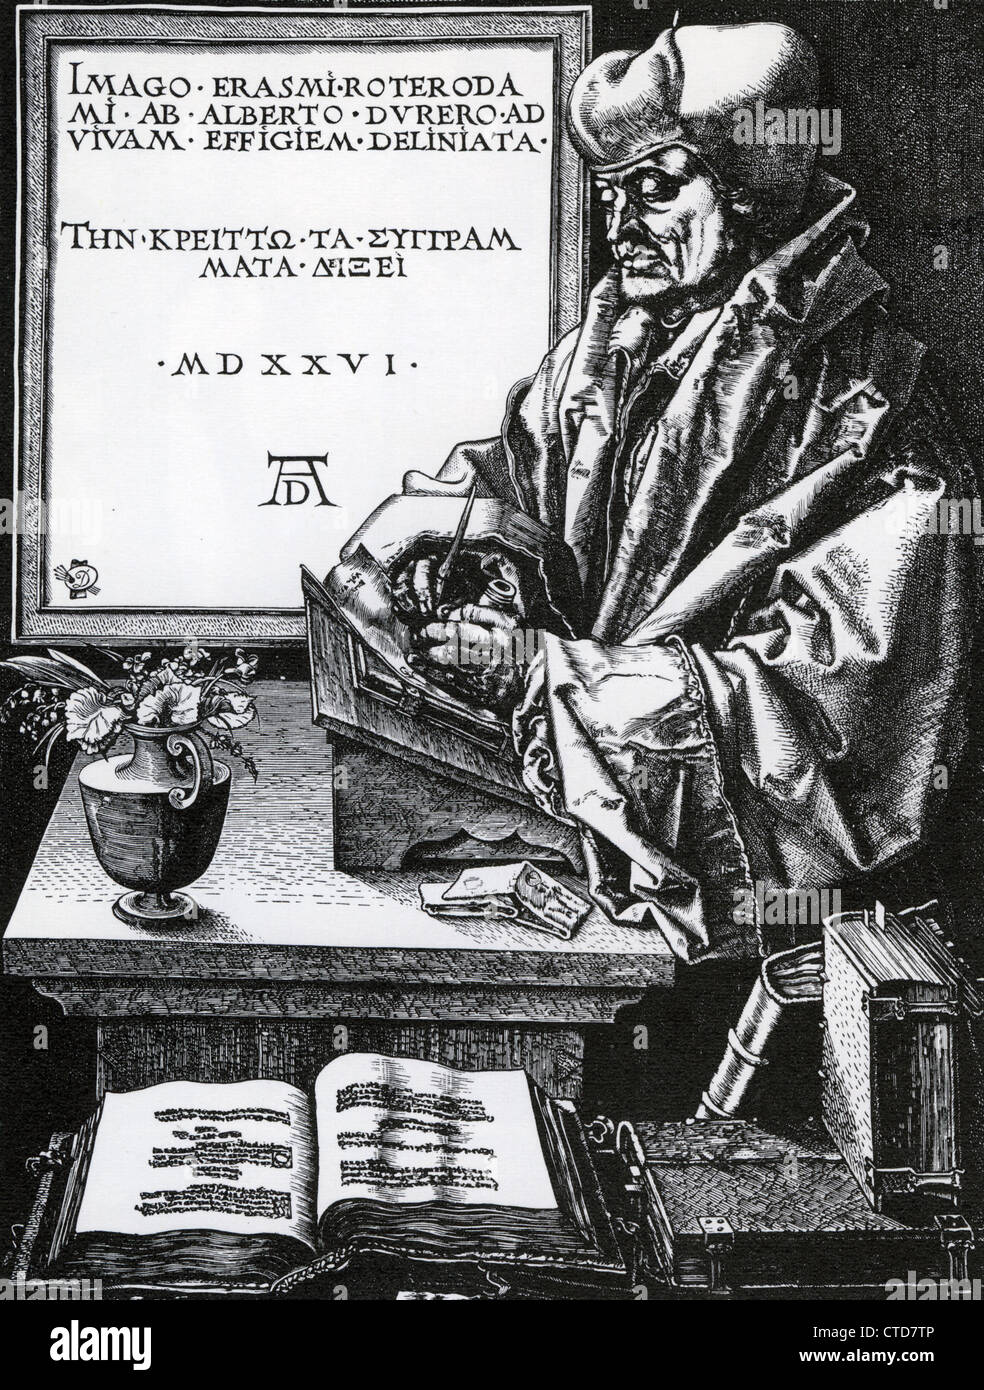 Desiderio ERASMUS (c) 1466-1536 olandese umanista rinascimentale in una xilografia di Albrecht Dürer Foto Stock